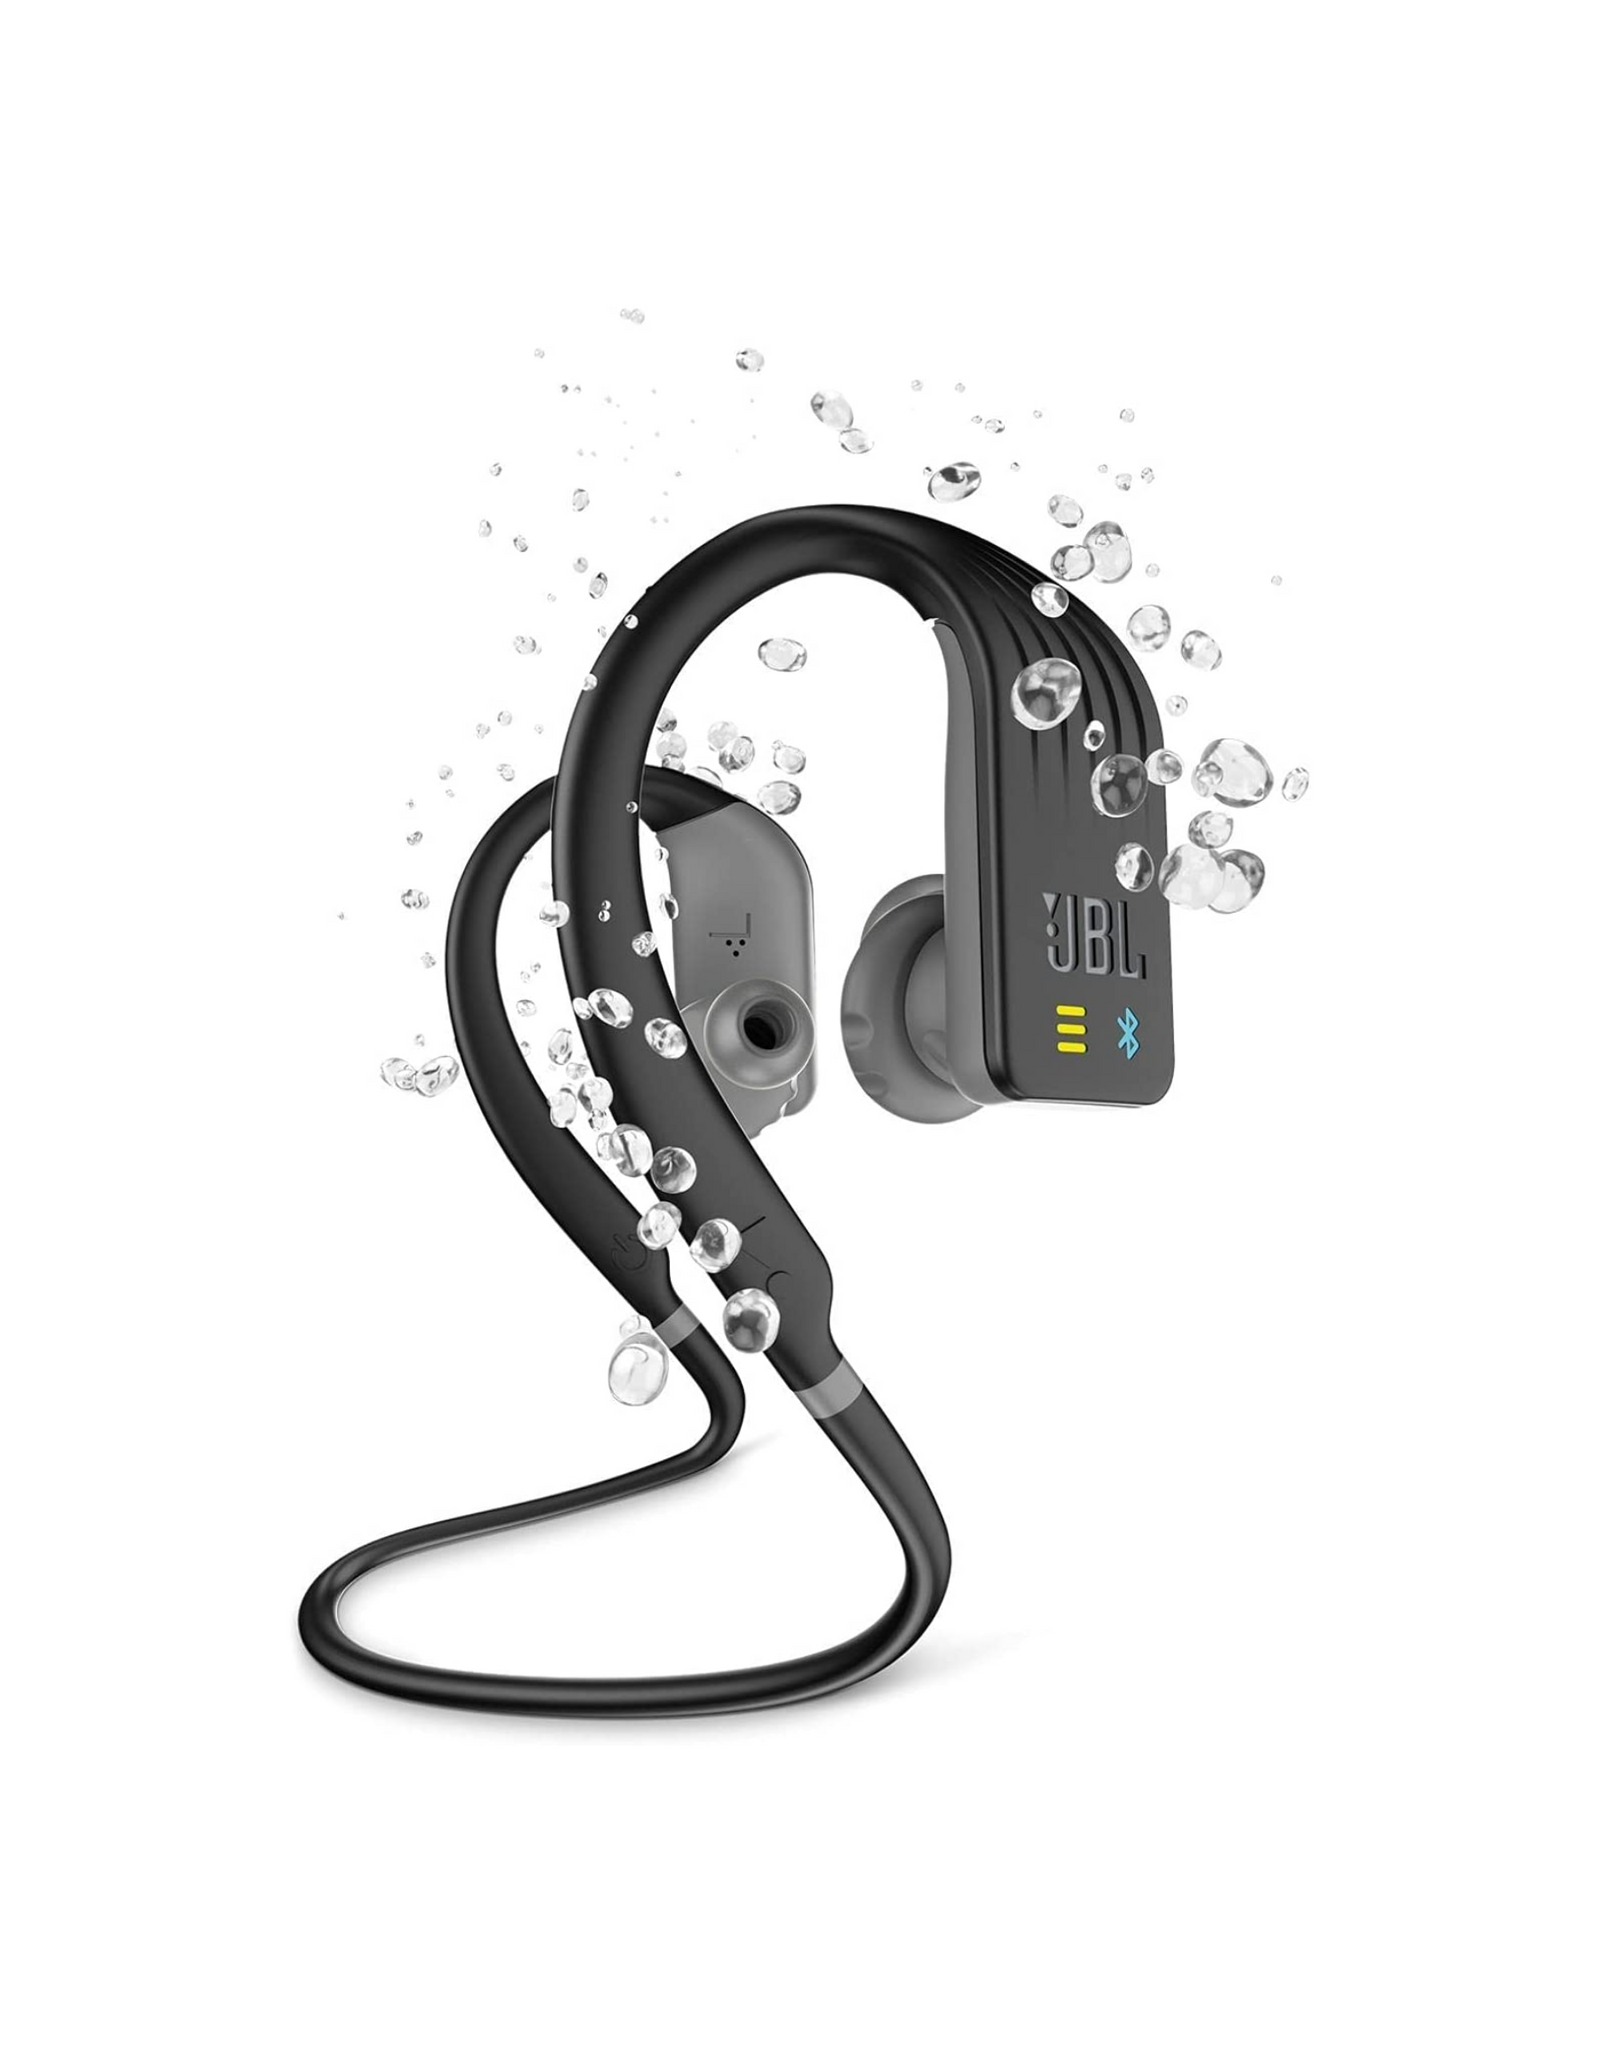 JBL Endurance DIVE - Waterproof Wireless In-Ear Sport Headphones with MP3 Player - Black